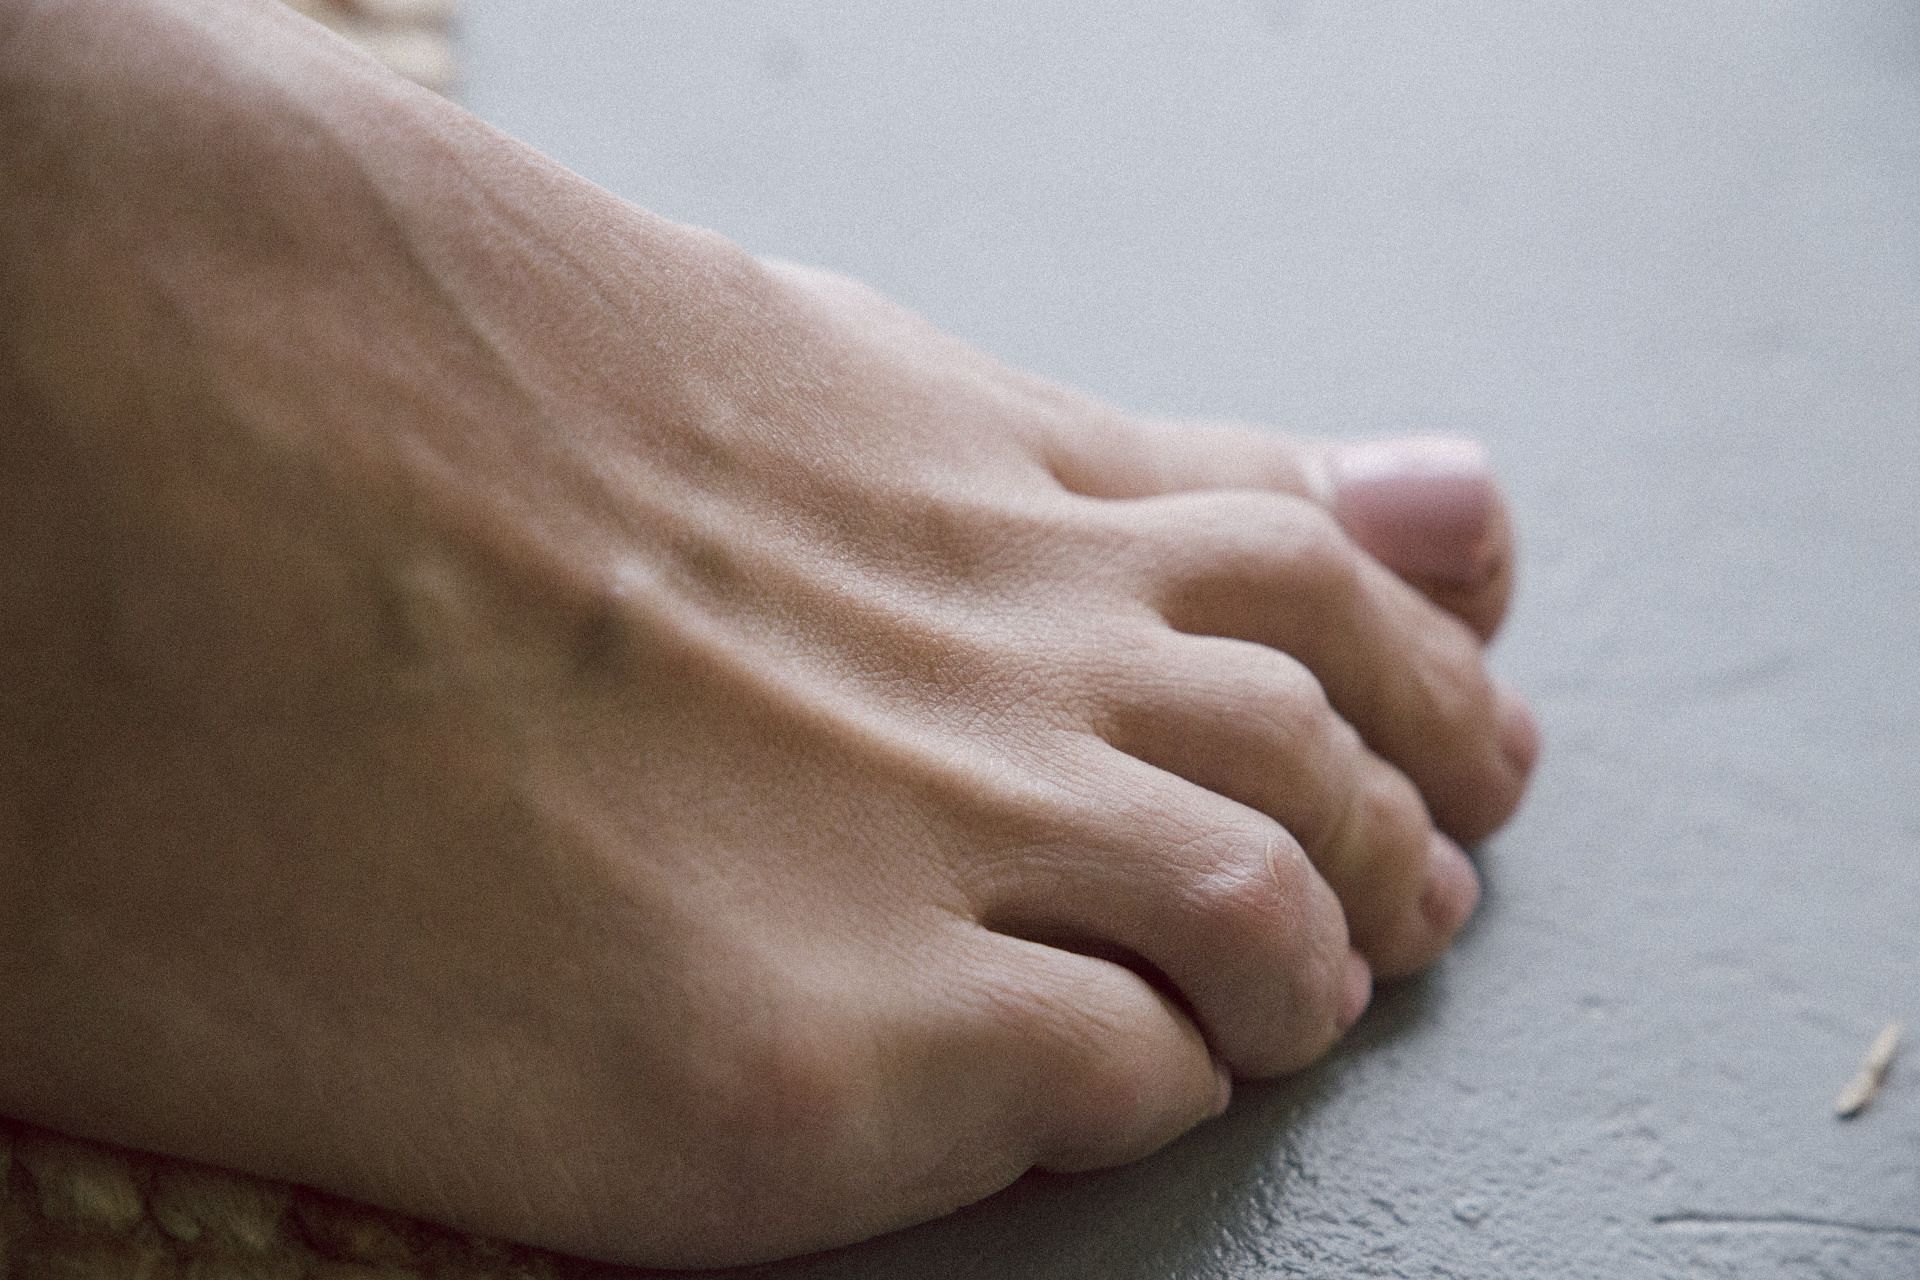 Symptoms of gout appear in the big toe frequently. (Image via Unsplash/ Klara Kulikova)